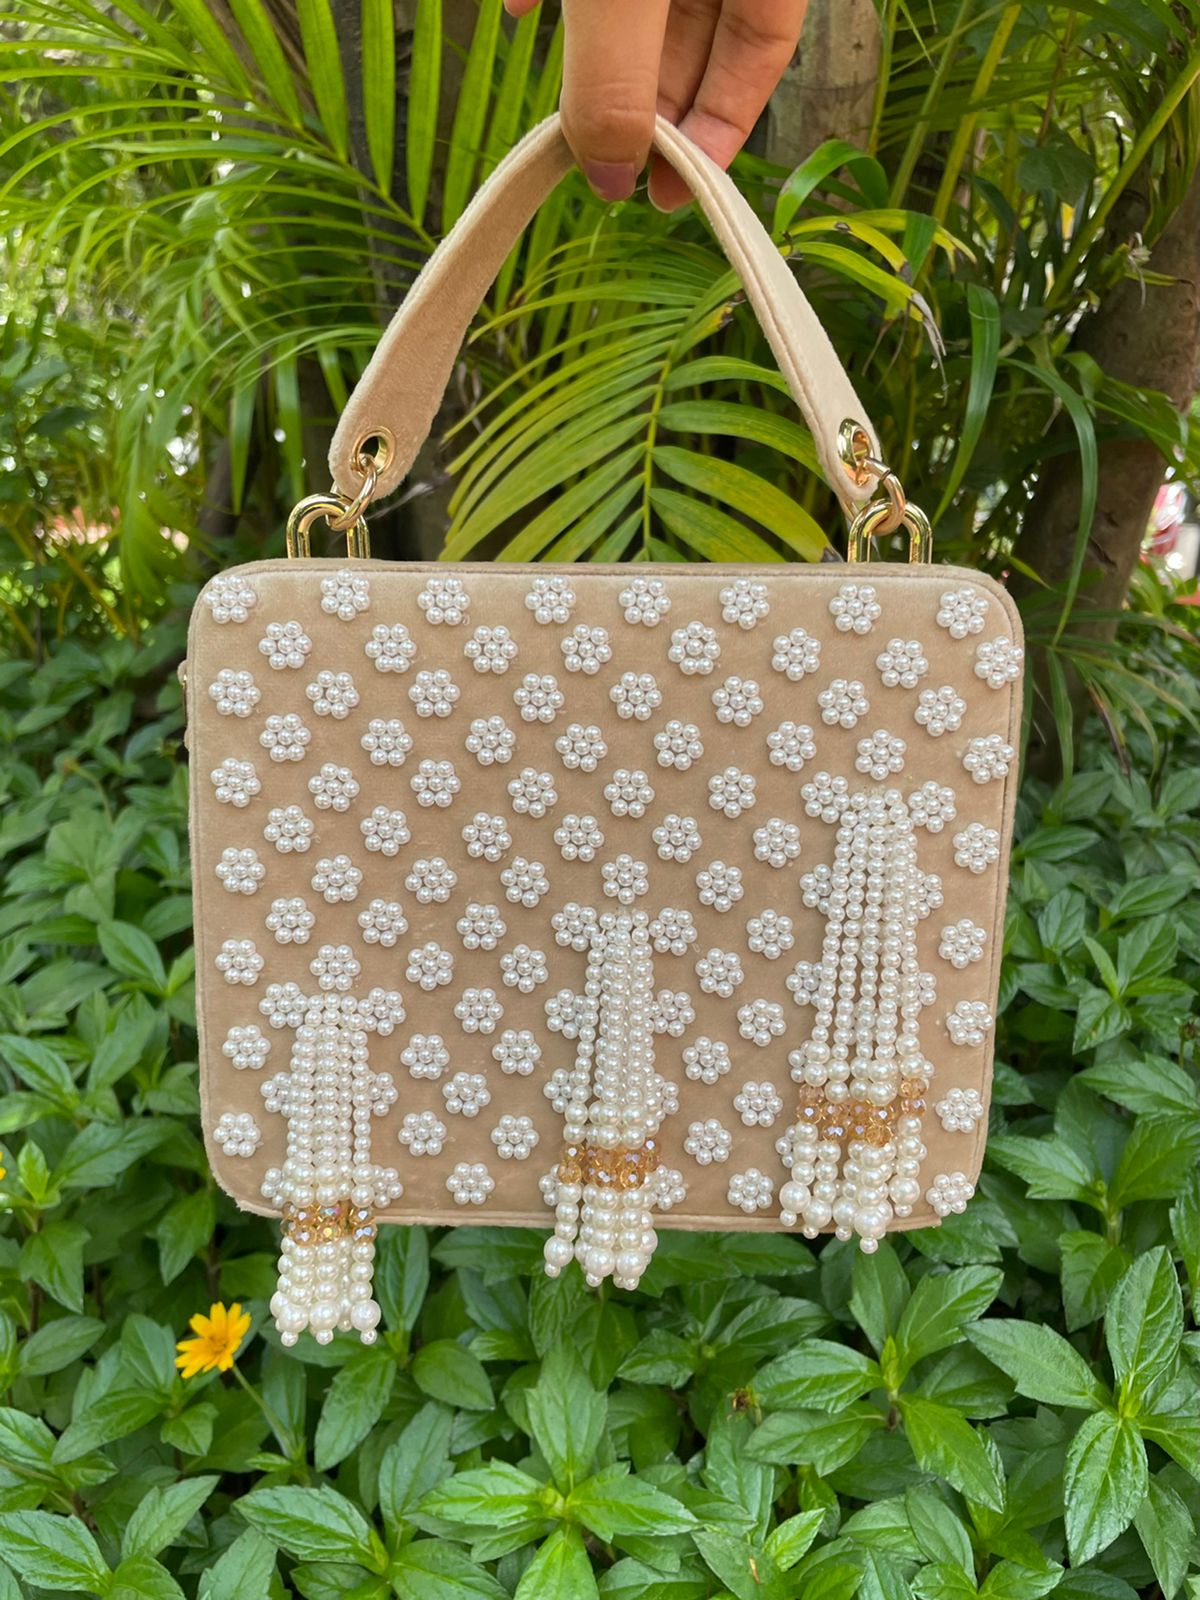 Suede suitcase handbag with hanging pearls